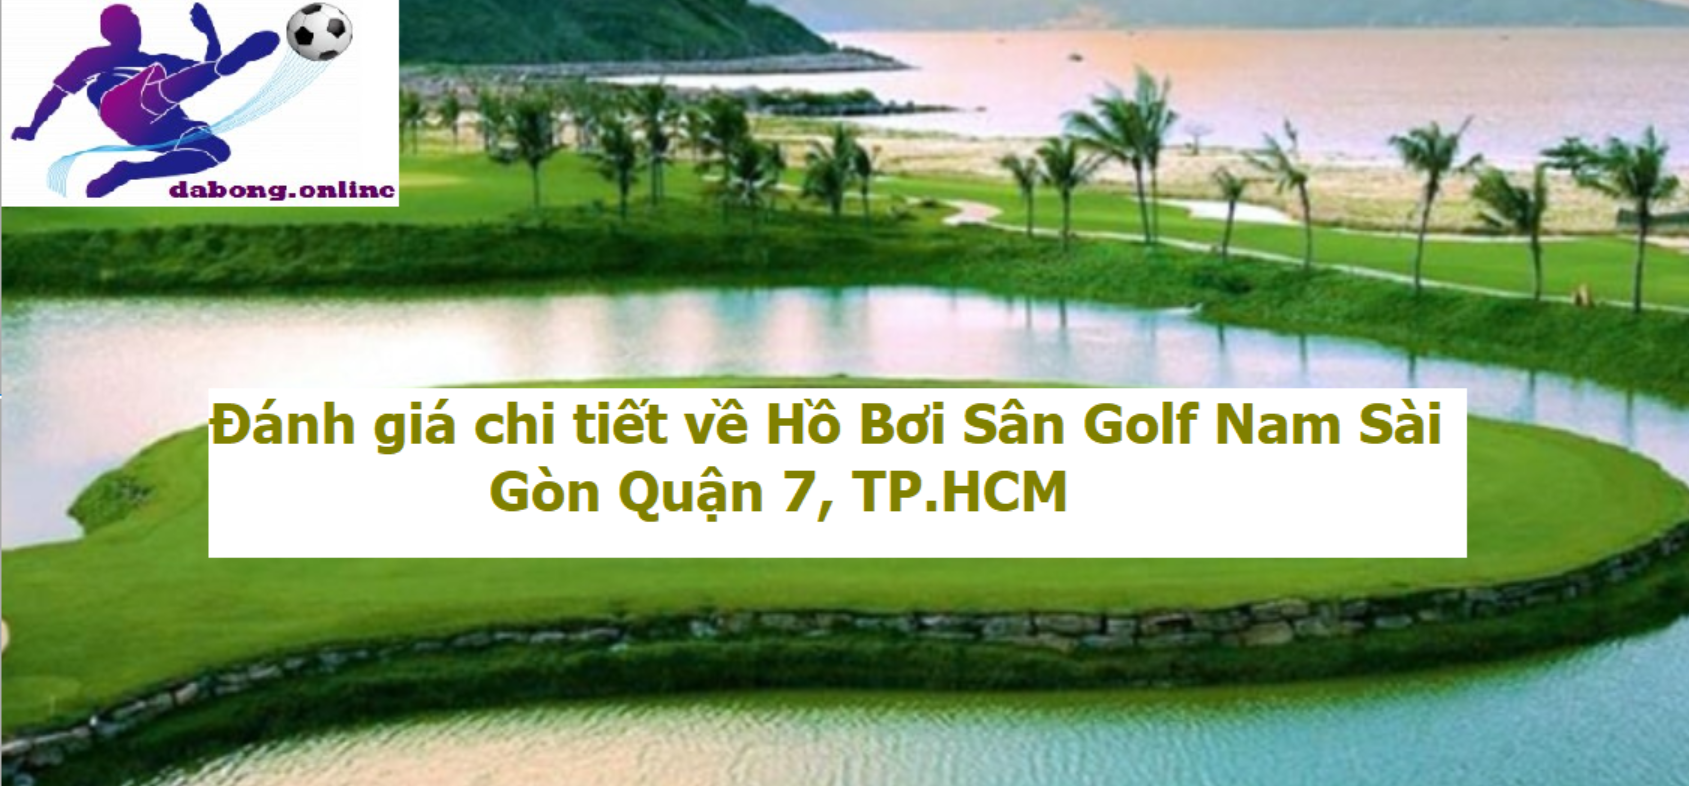 ho-boi-san-golf-nam-sai-gon-quan-7-tp-hcm